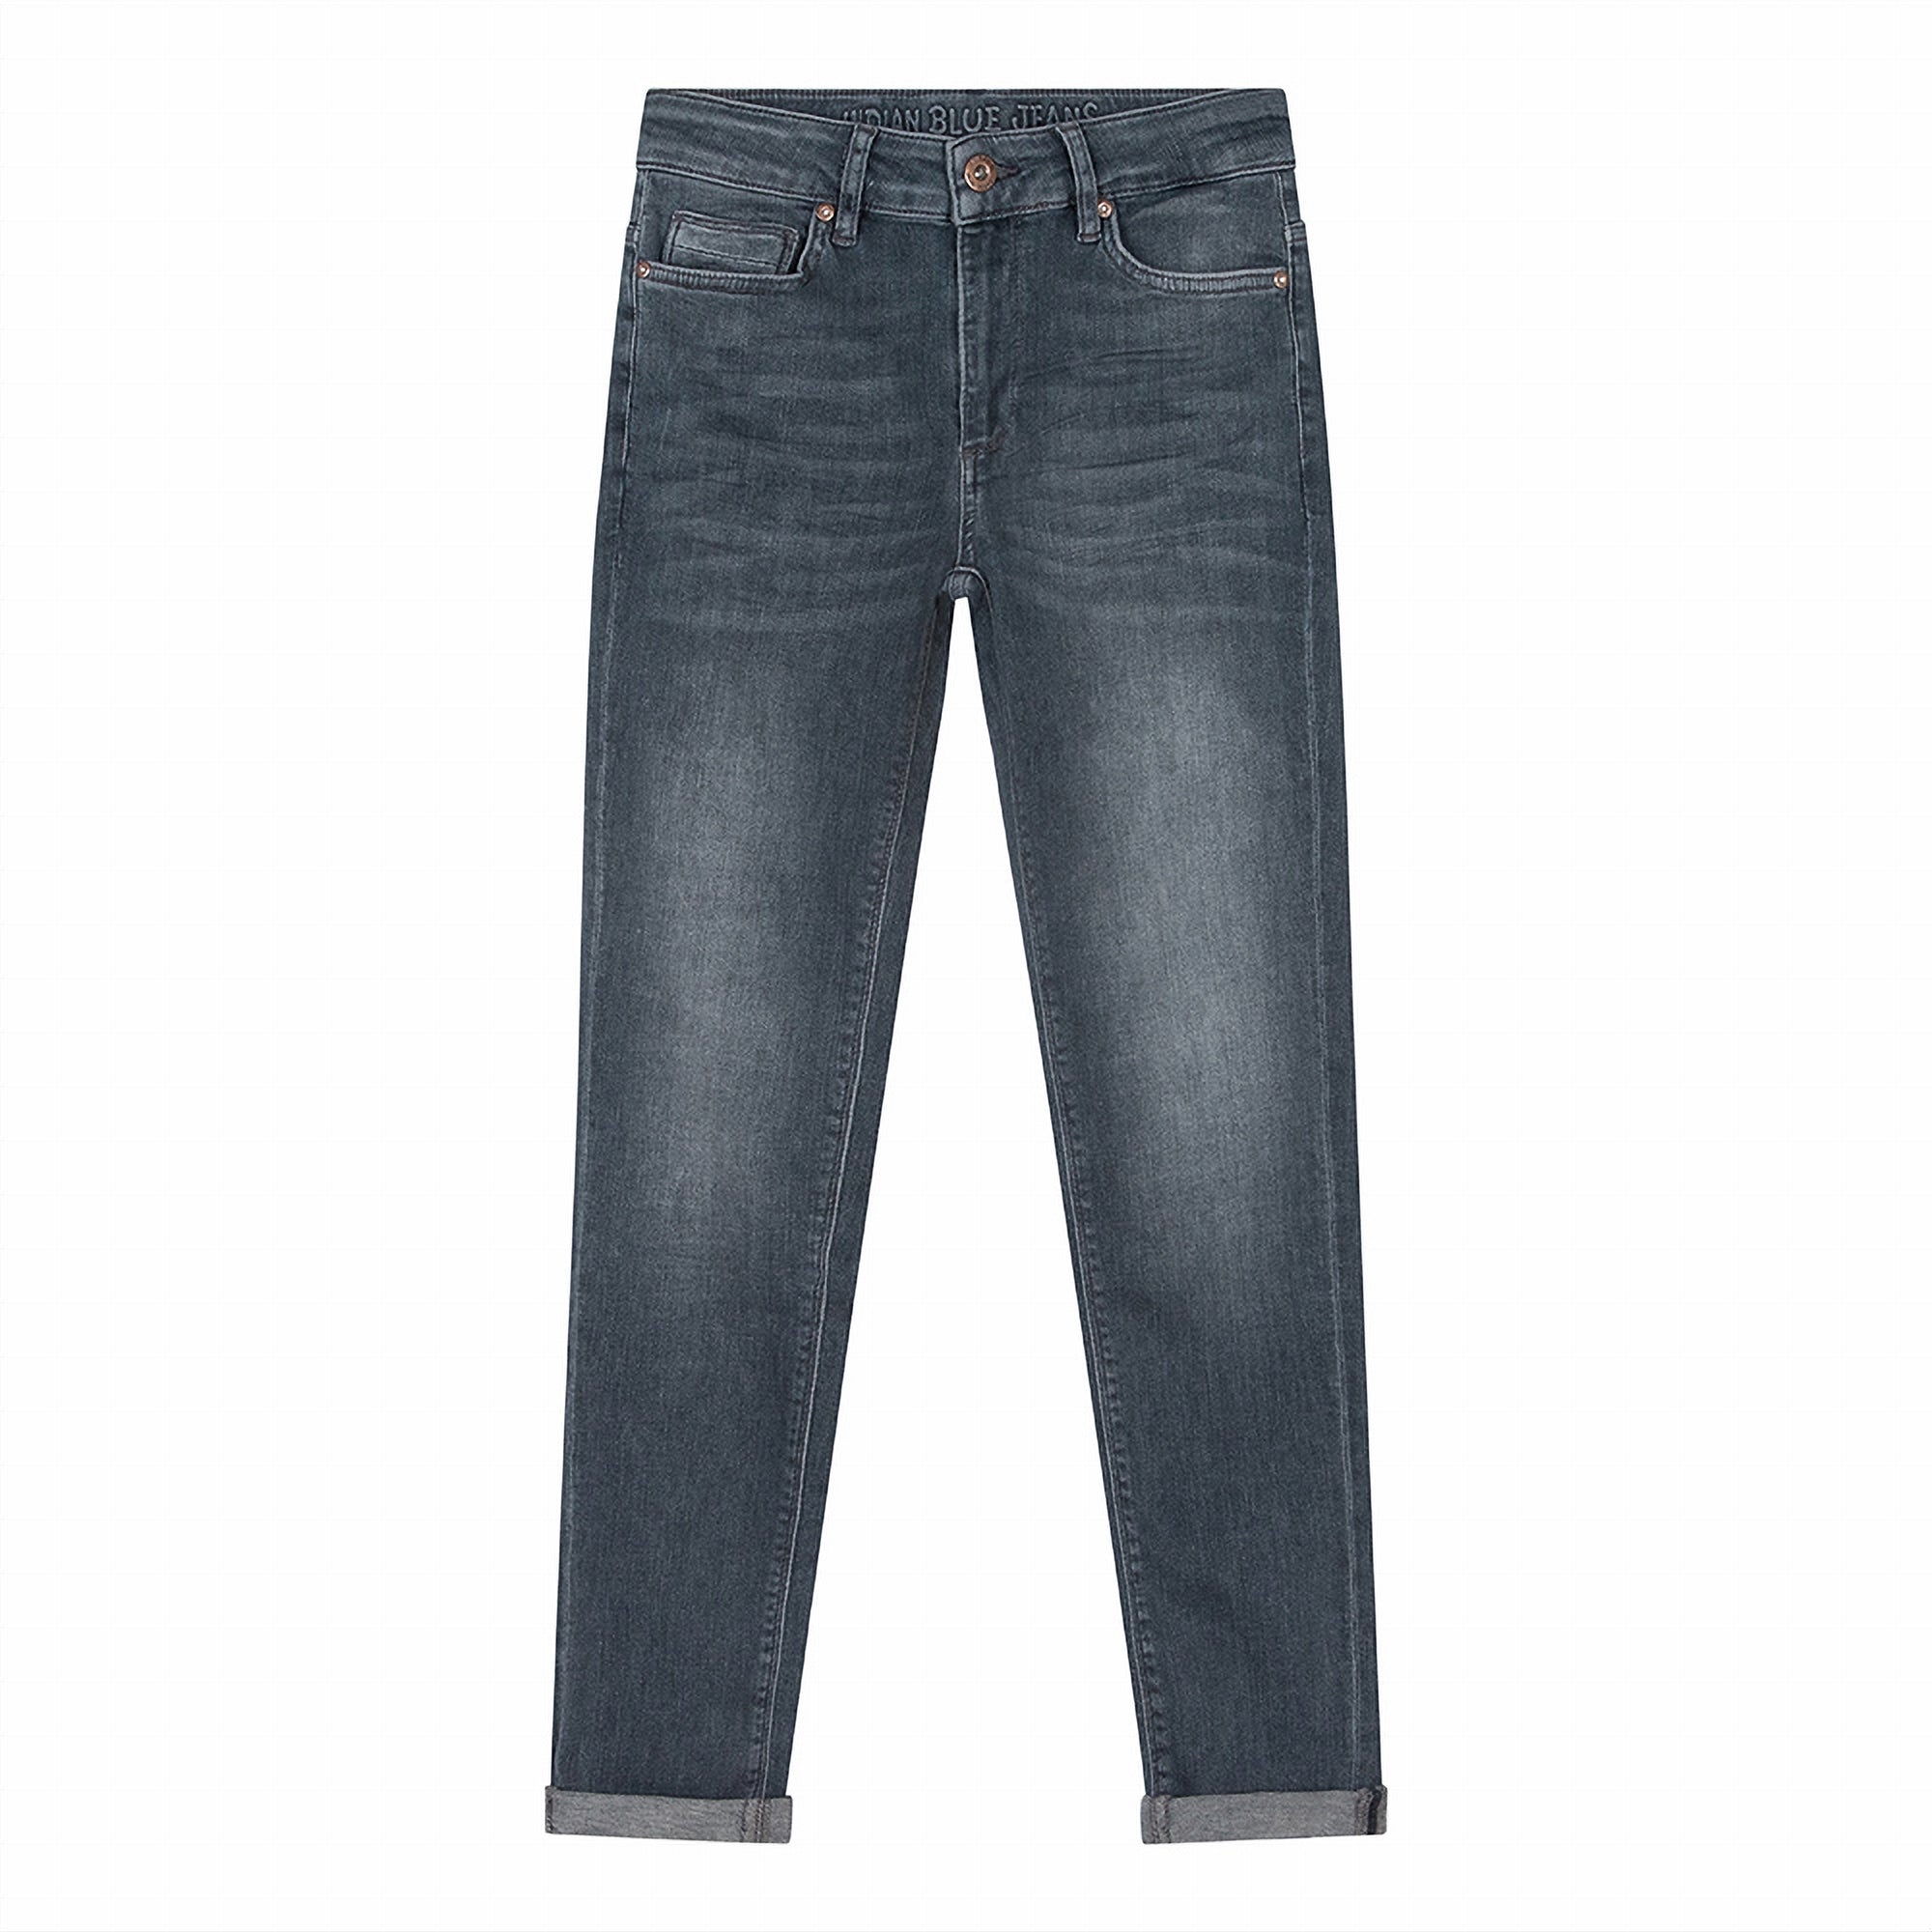 Jongens Jeans Blue Grey Jay Tapered Fit van Indian Blue Jeans in de kleur Dark Blue Grey Denim in maat 176.